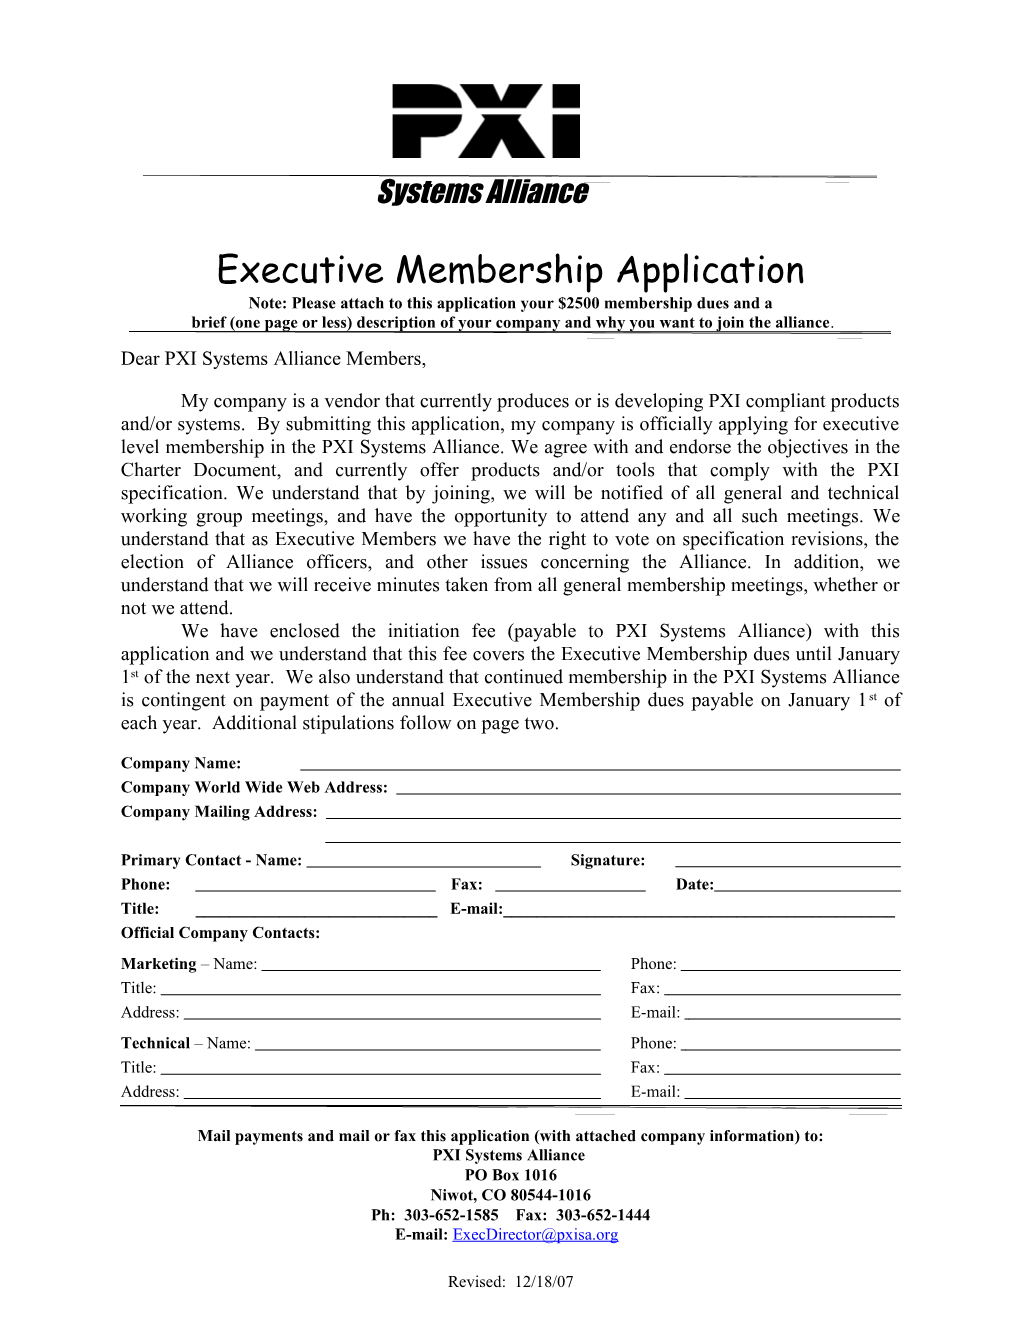 PXISA Executive Membership Application 2008